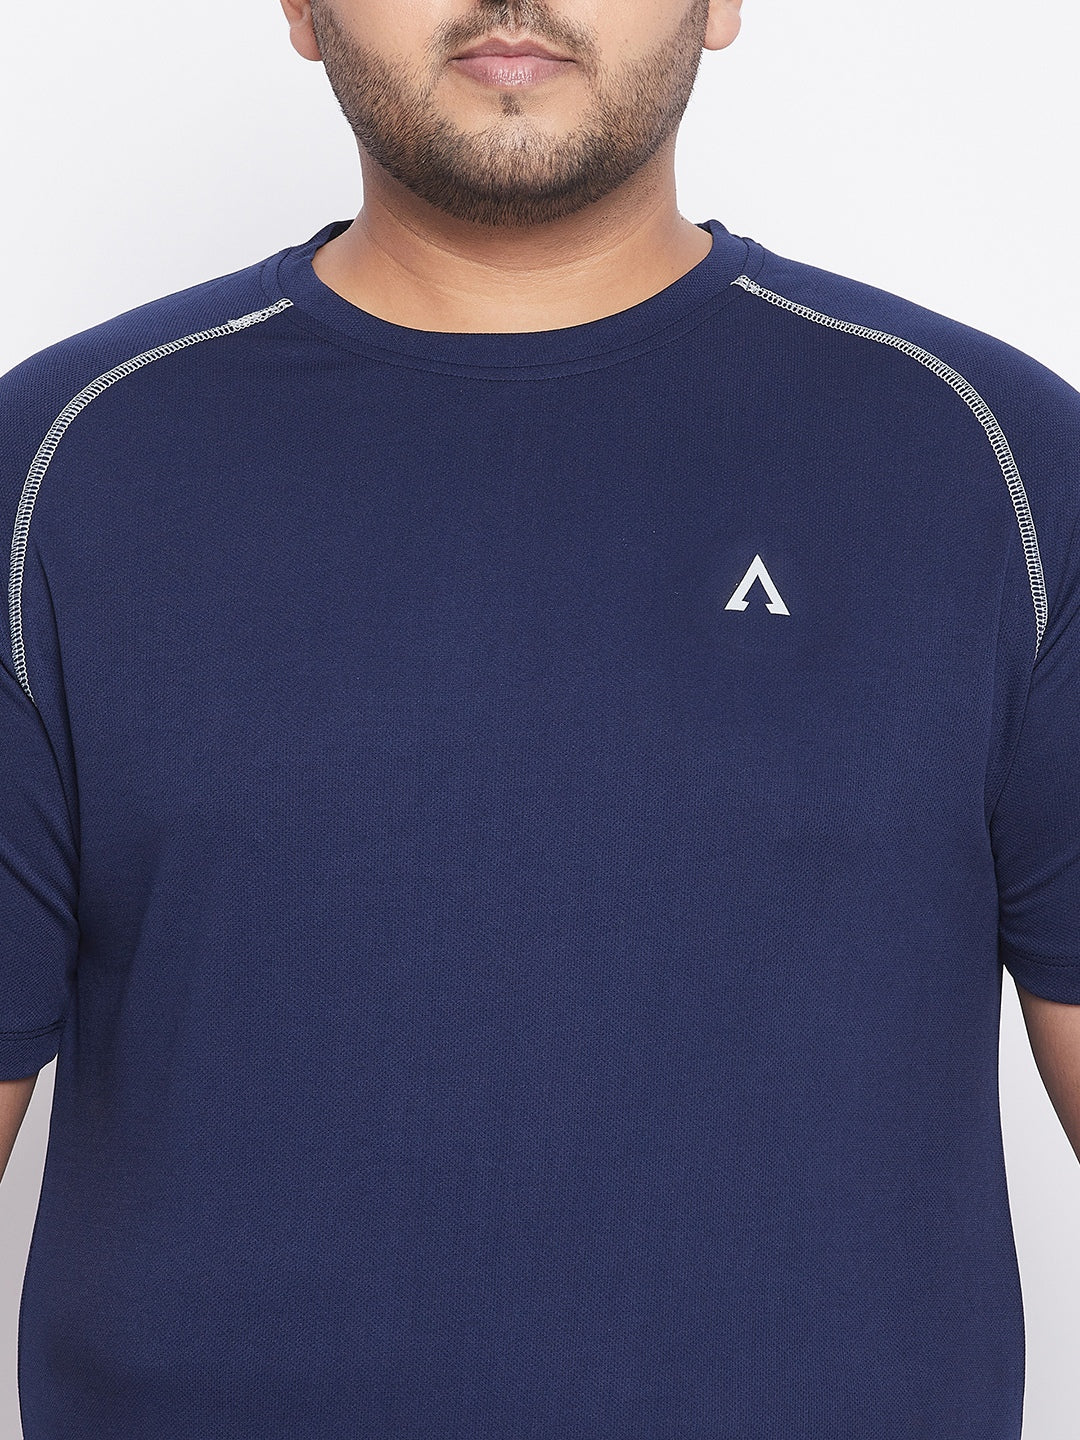 Austivo Men's Active Wear  T-shirt